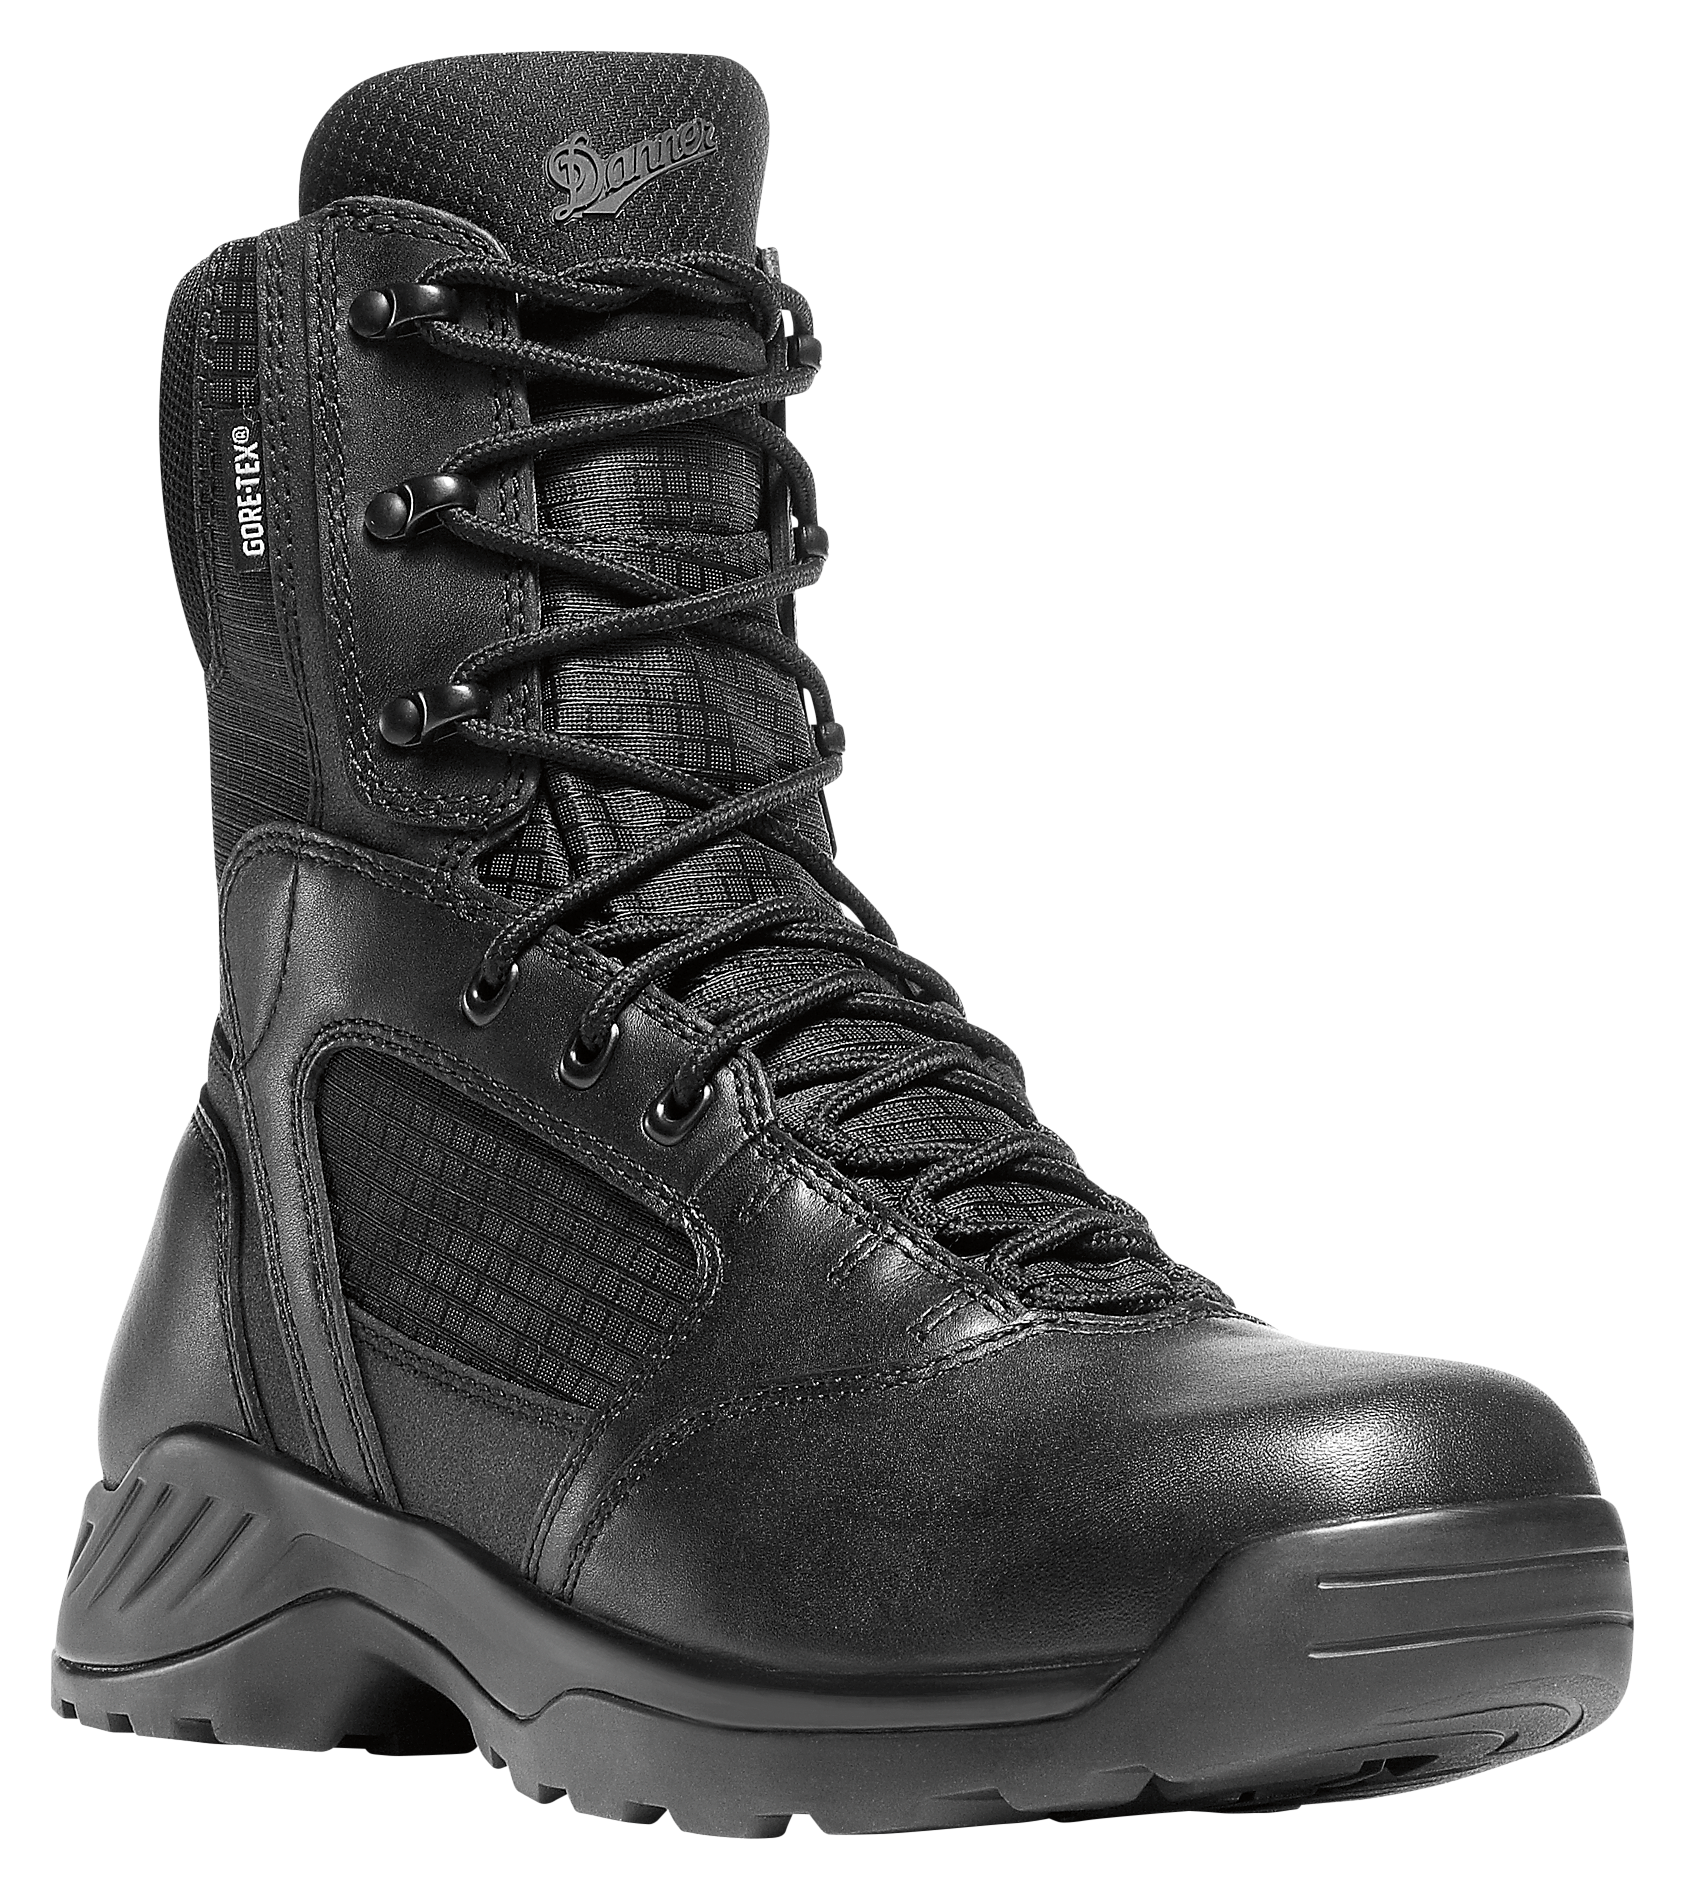 Danner Kinetic GTX Side-Zip Waterproof Tactical Duty Boots for Men - Black - 14M